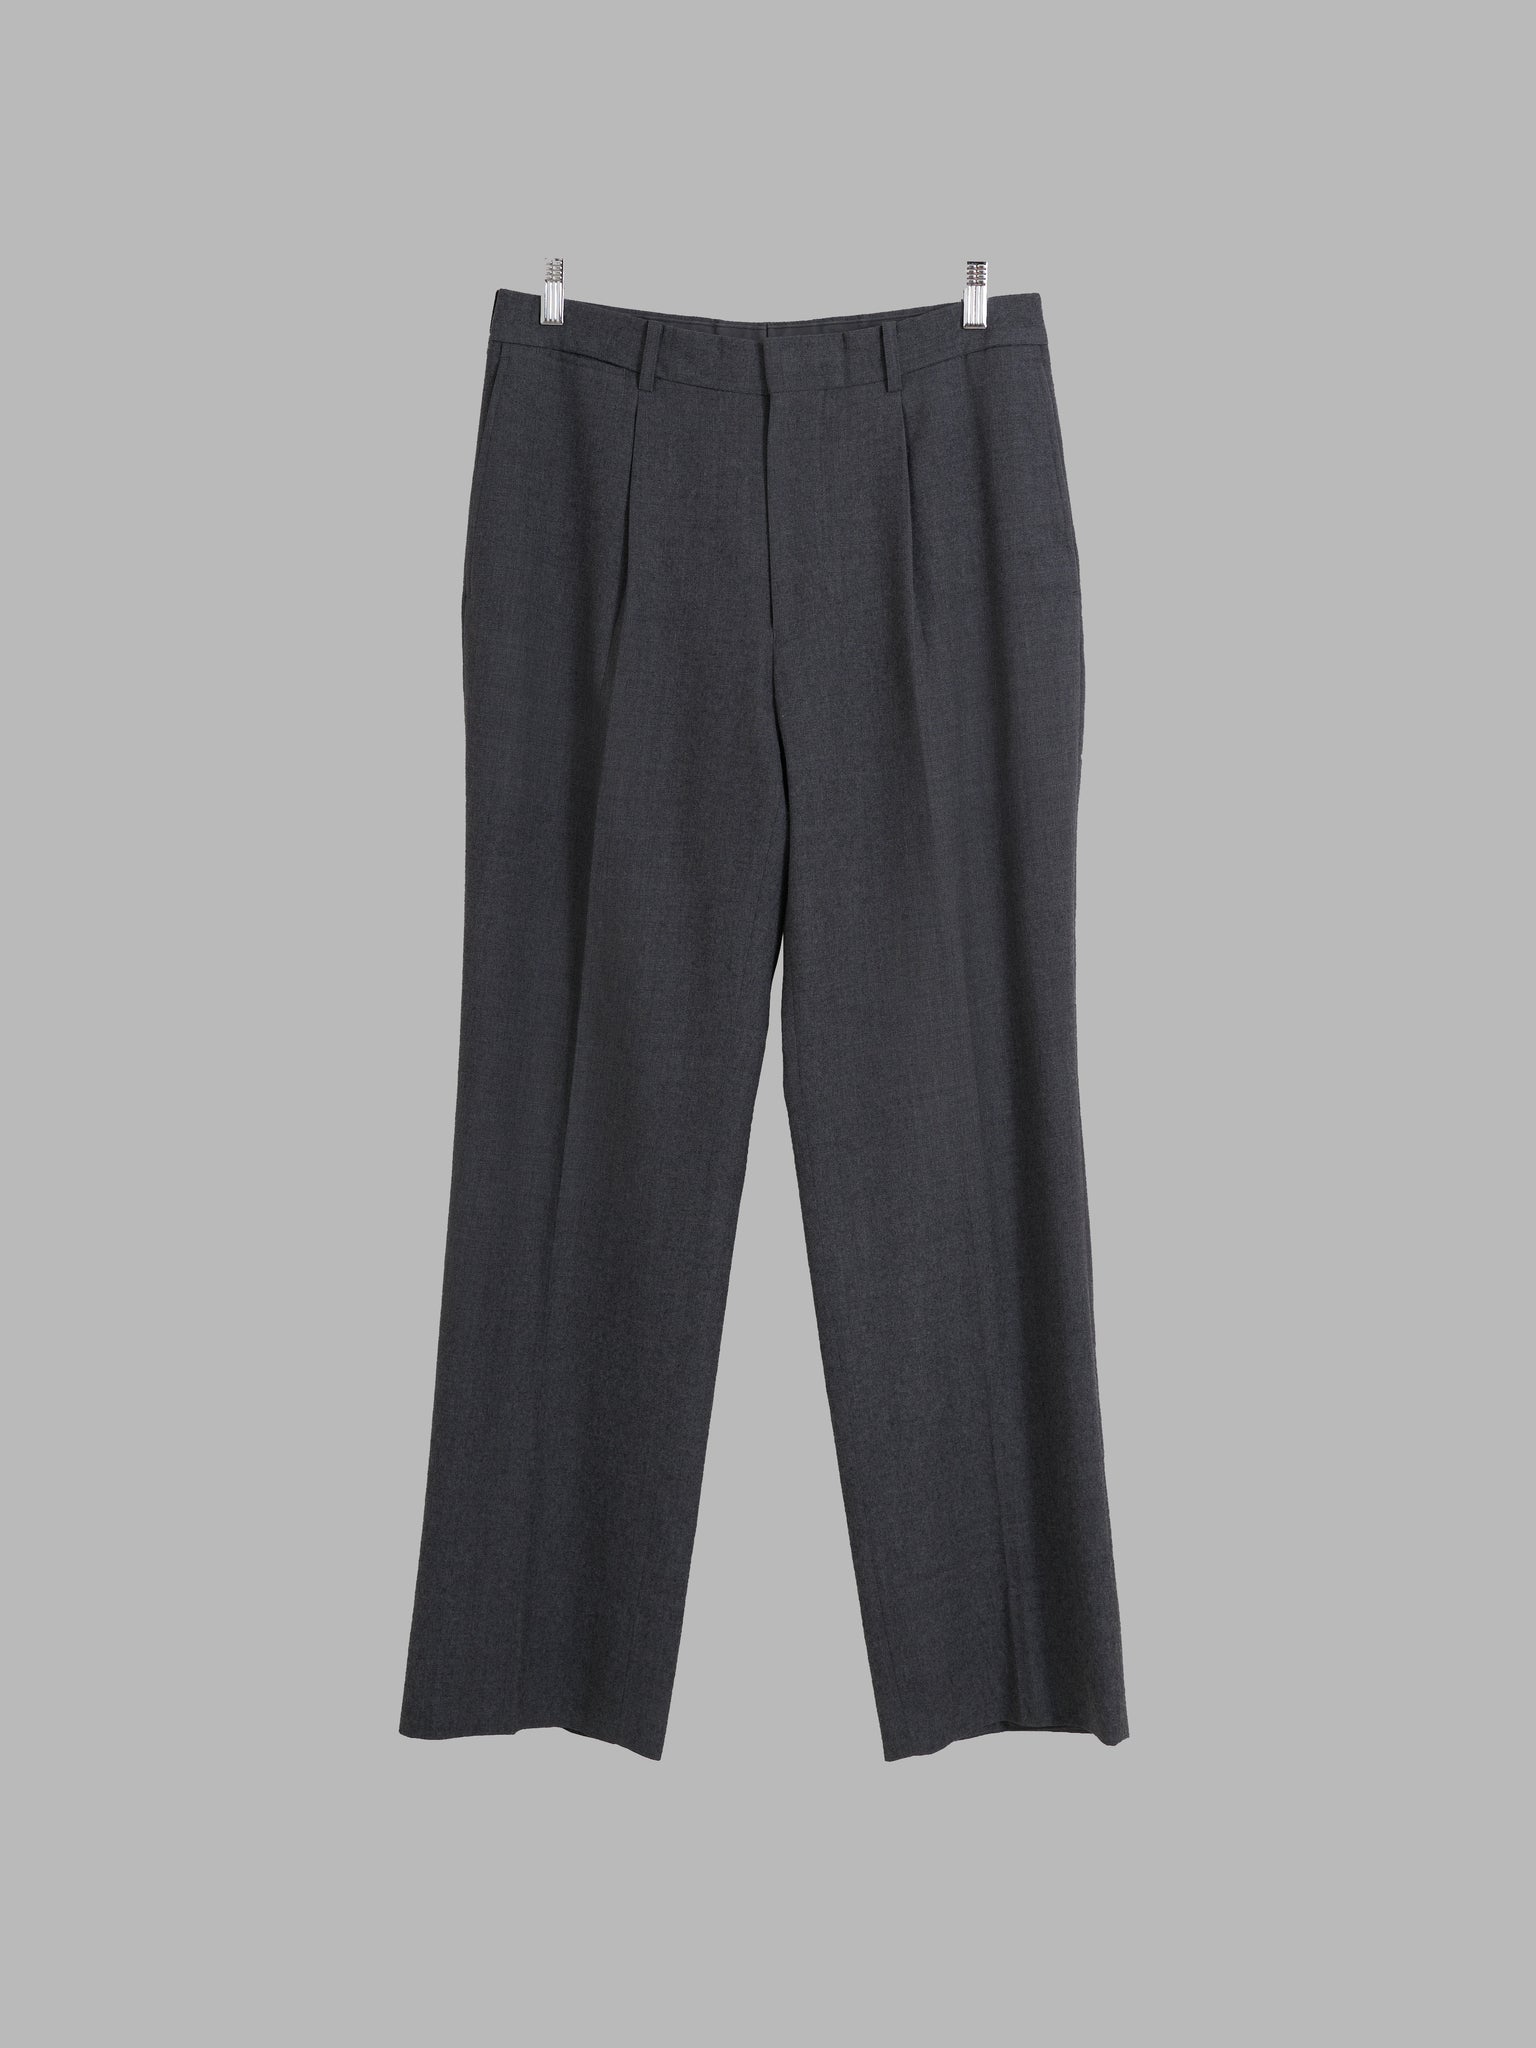 Kenzo Homme 1990s grey wool single tuck trousers - size 3 M S